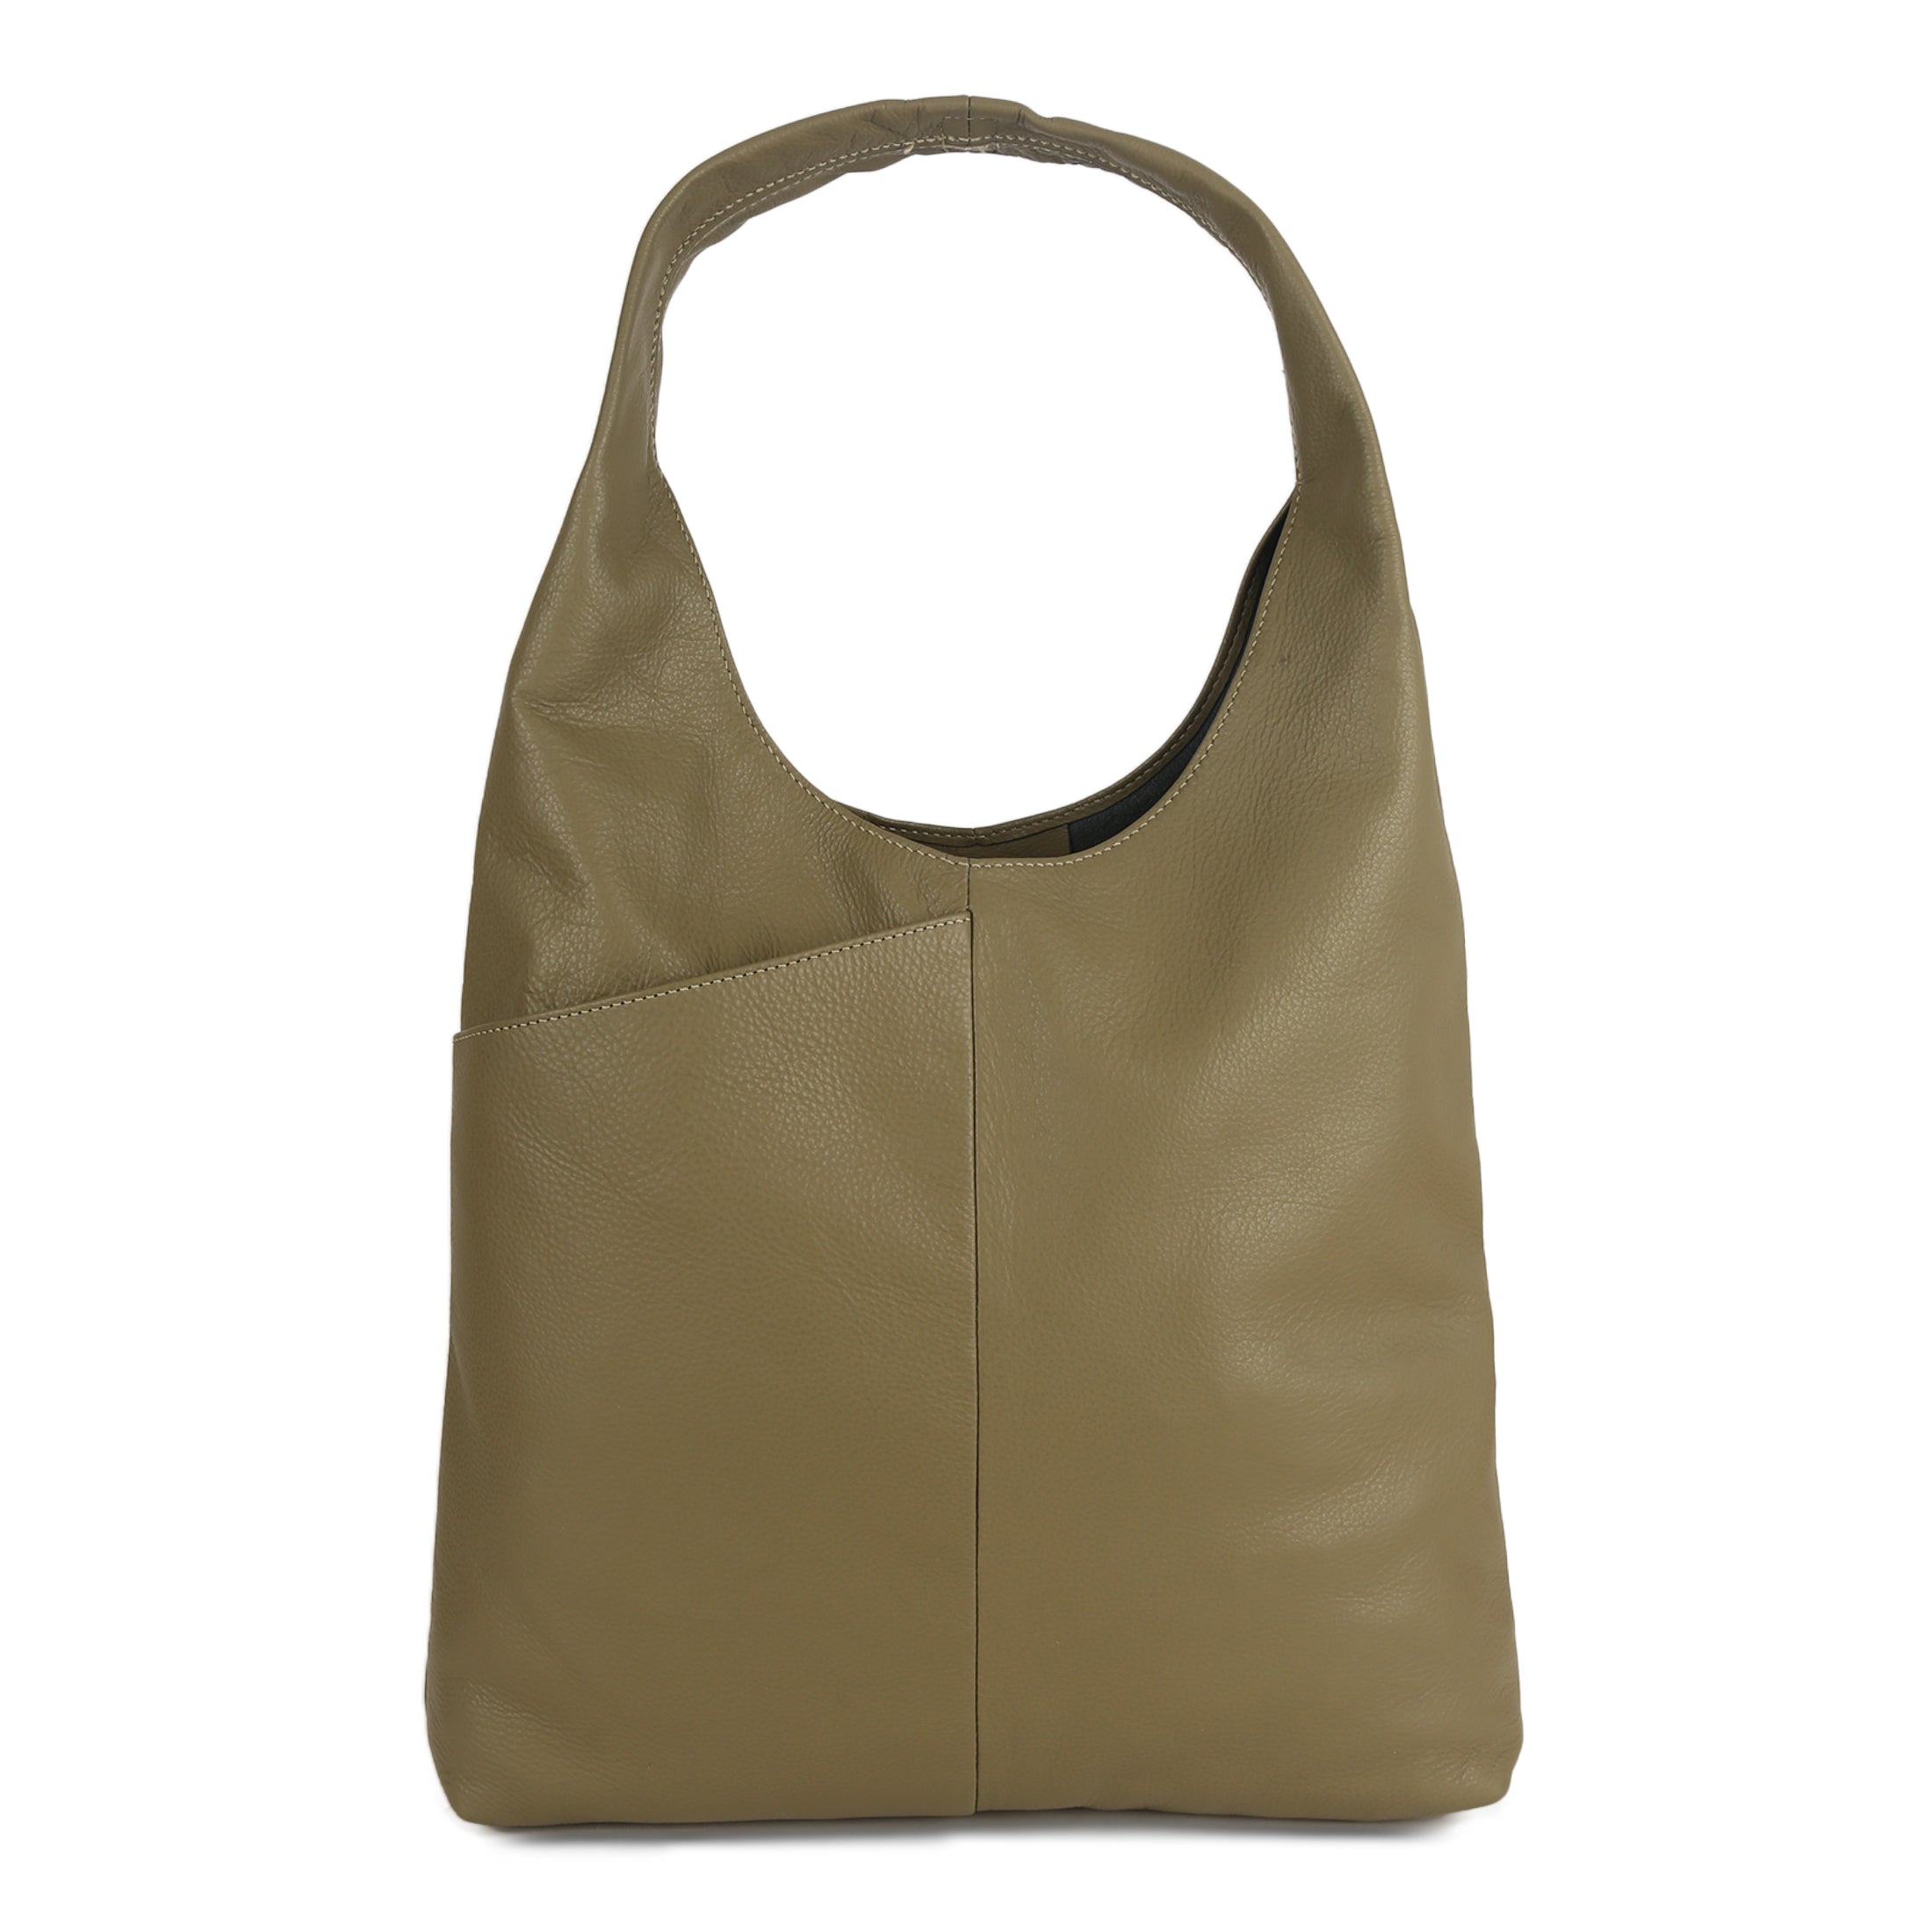 Olive Green Italian Leather Tote Bag - Heather Borg - SGB